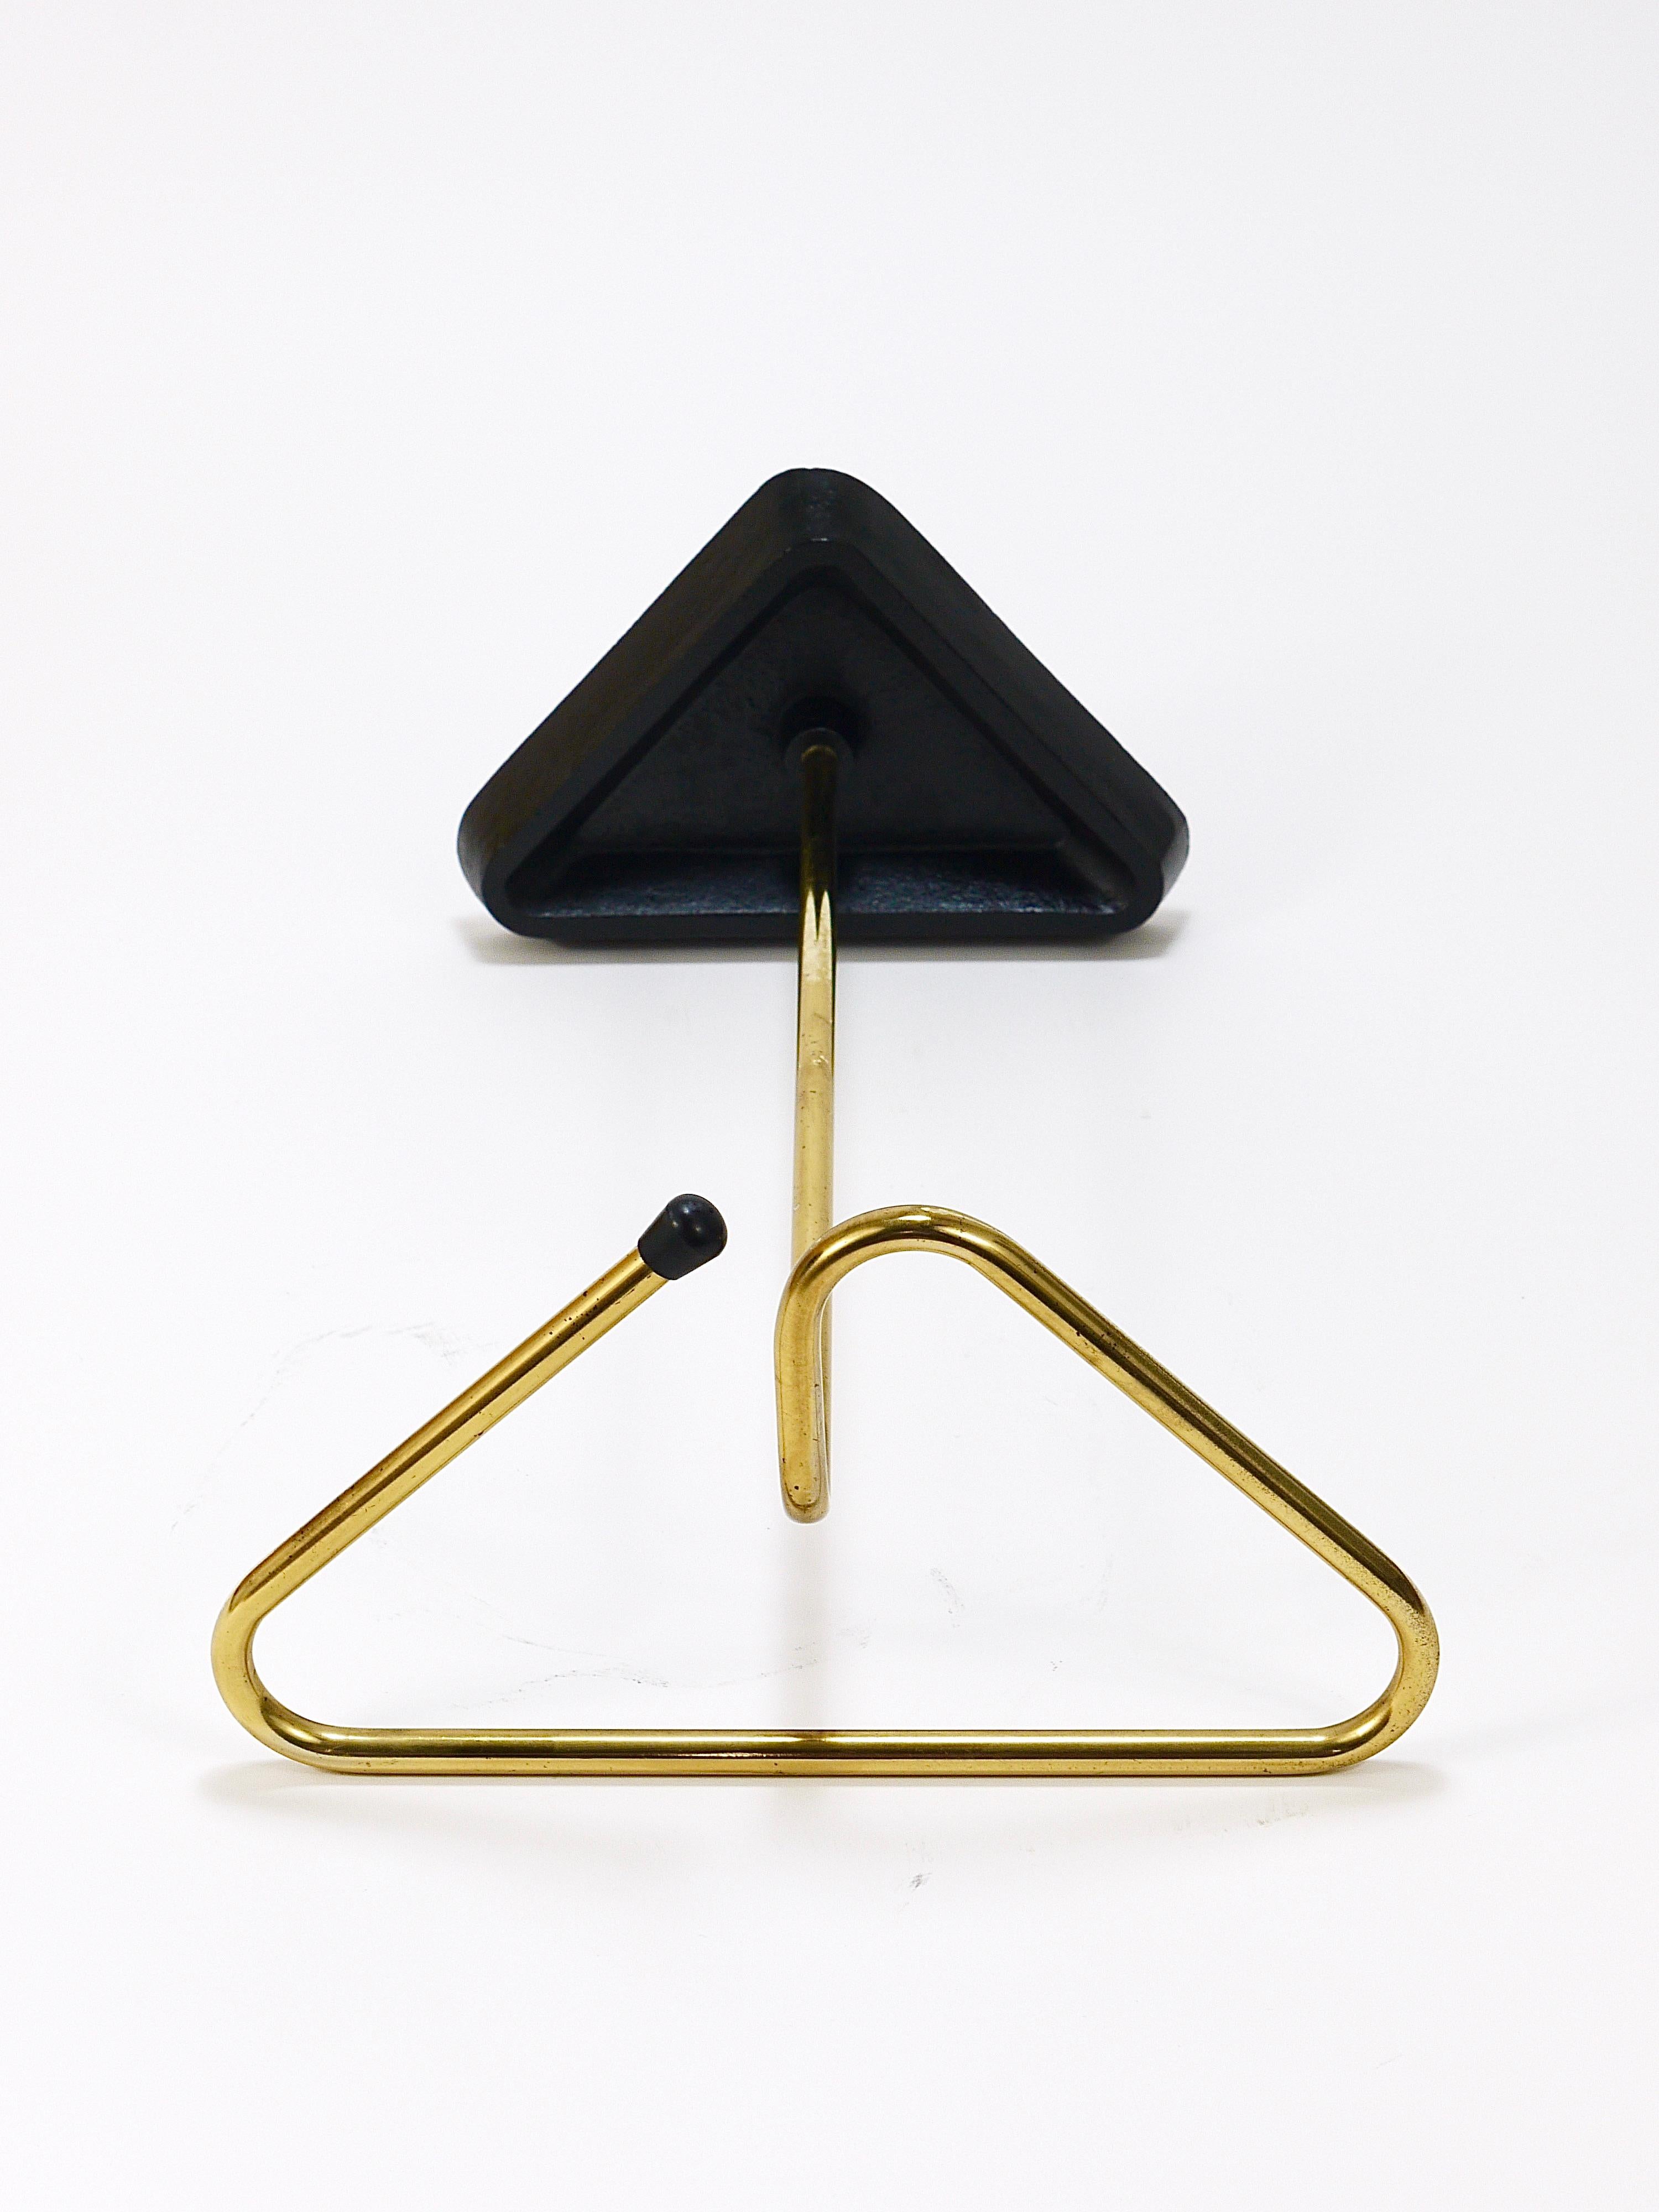 Midcentury Modern Triangle Umbrella Stand, Brass & Cast Iron, Austria, 1950s For Sale 7